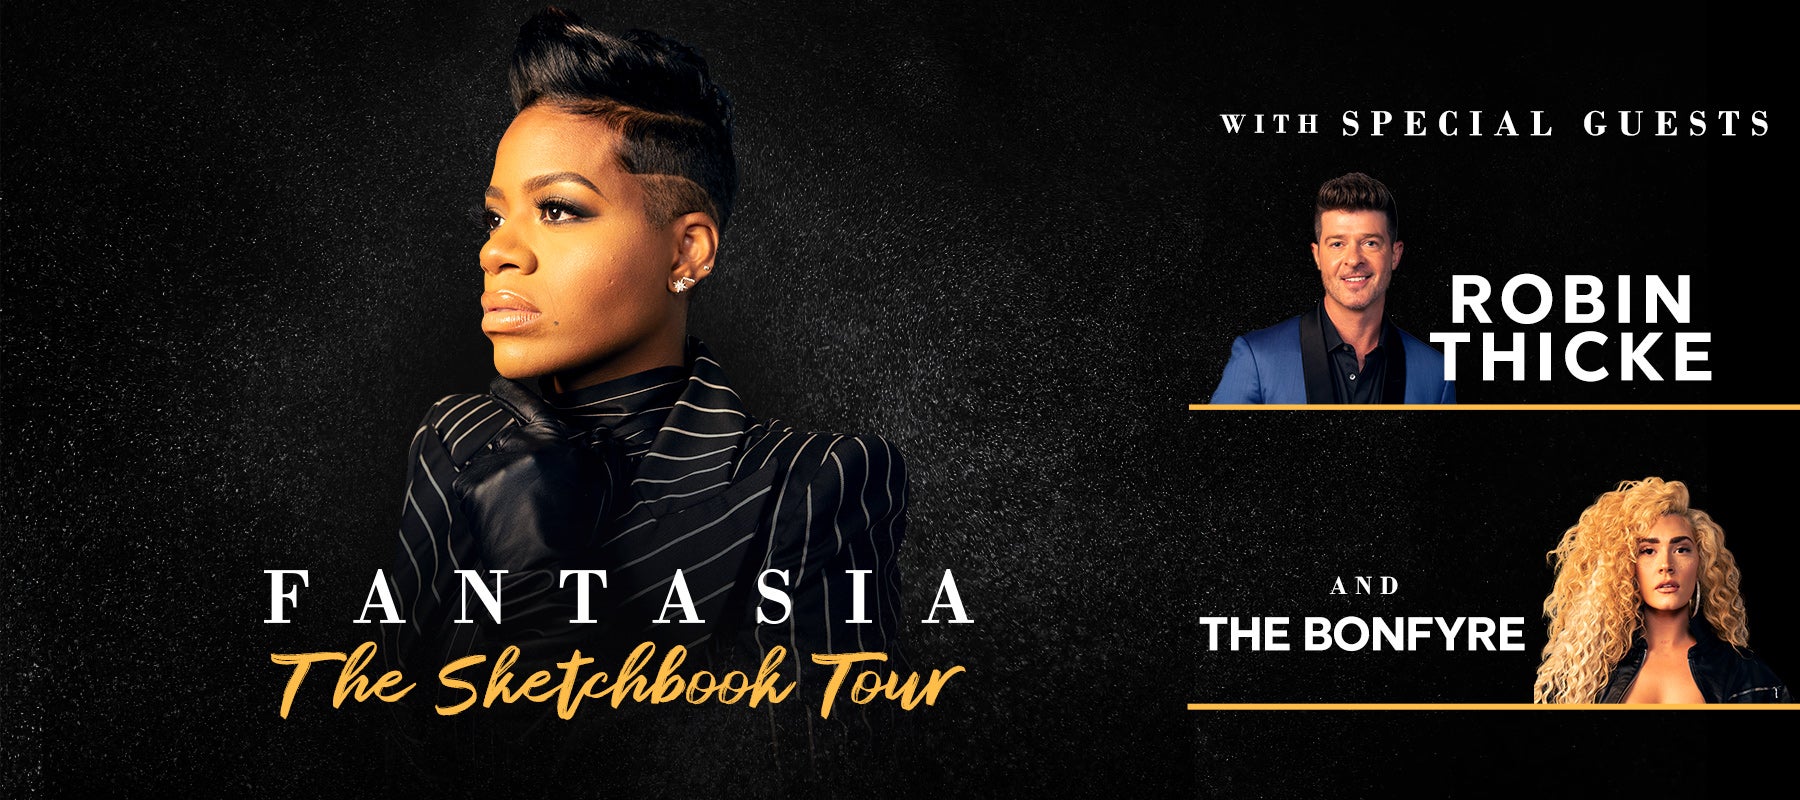 Fantasia Presents The Sketchbook Tour